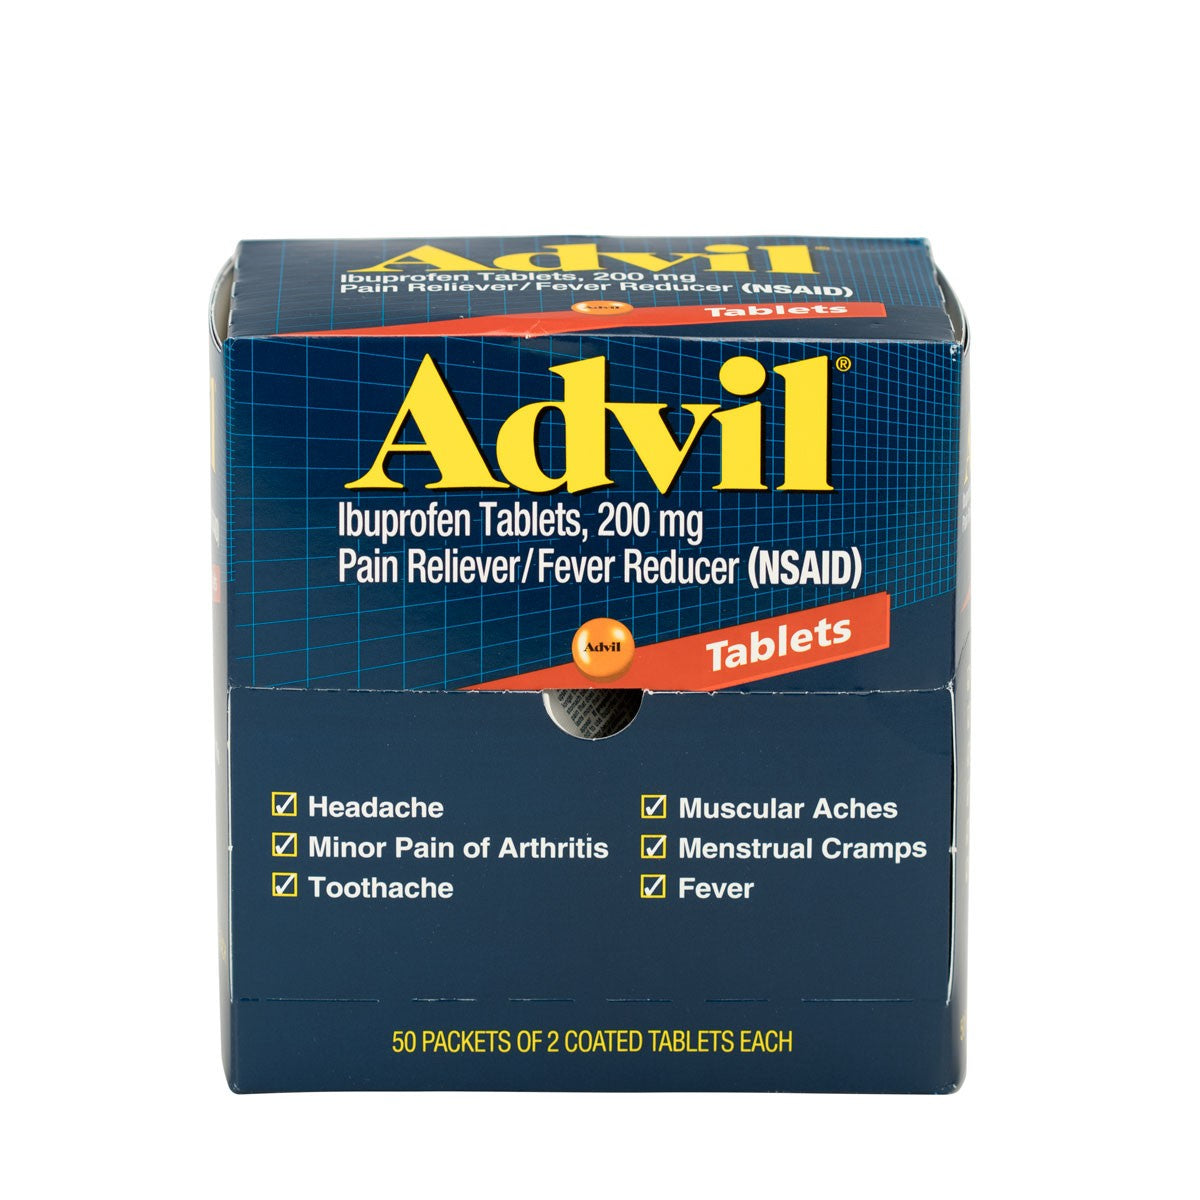 Advil Ibuprofen Medication, 50 Doses Of Two Tablets, 200 Mg - BS-FAK-15000-1-FM